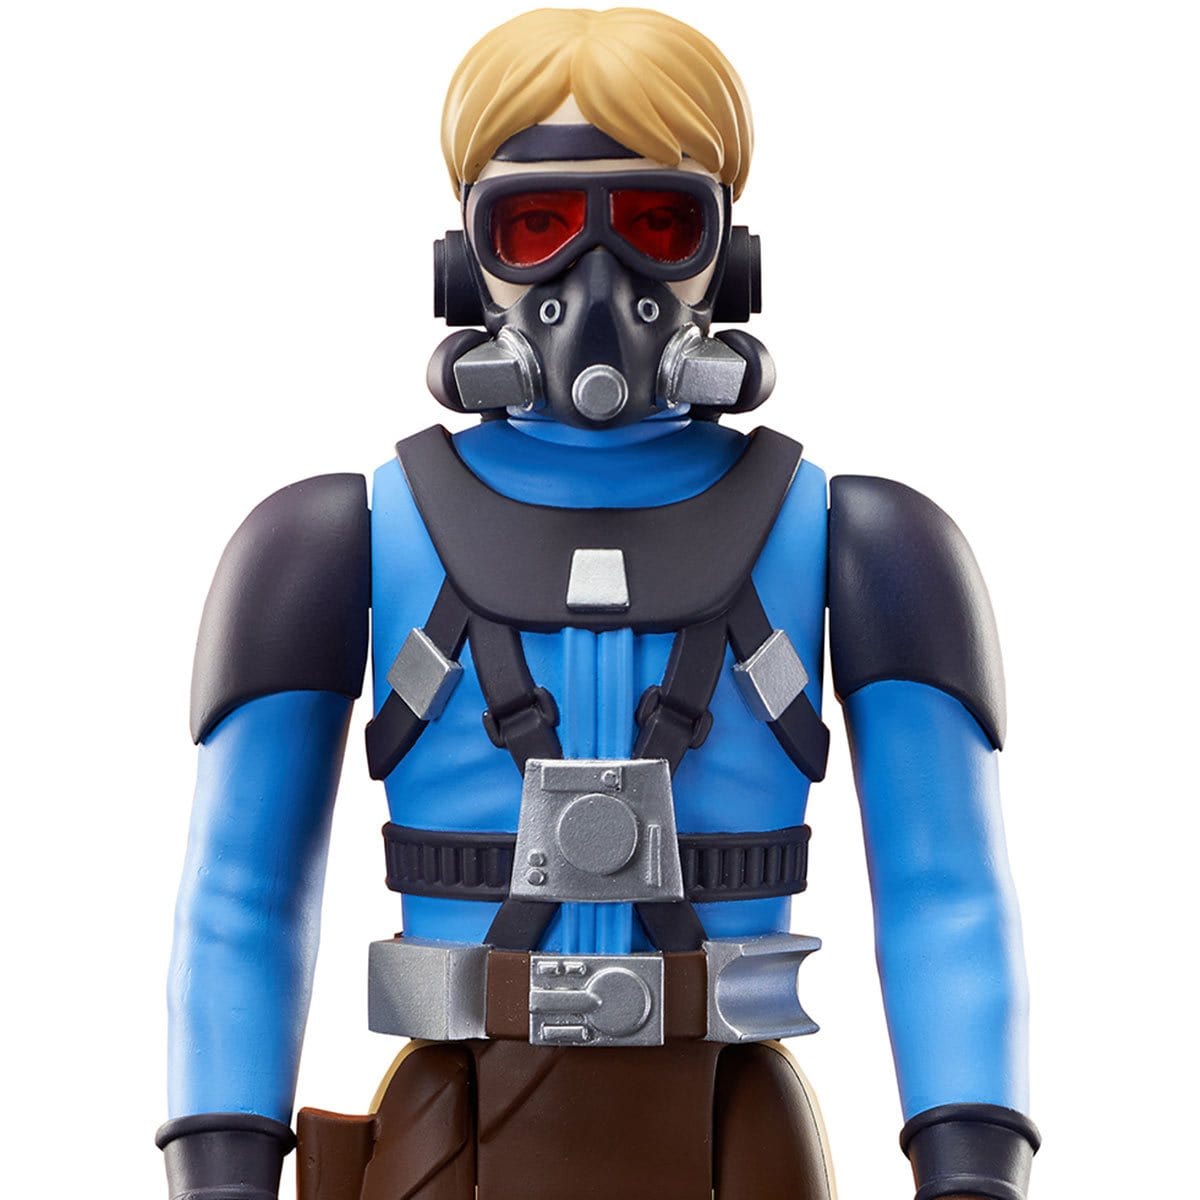 Star Wars Concept Luke Skywalker 12-In Jumbo Action Figure close up